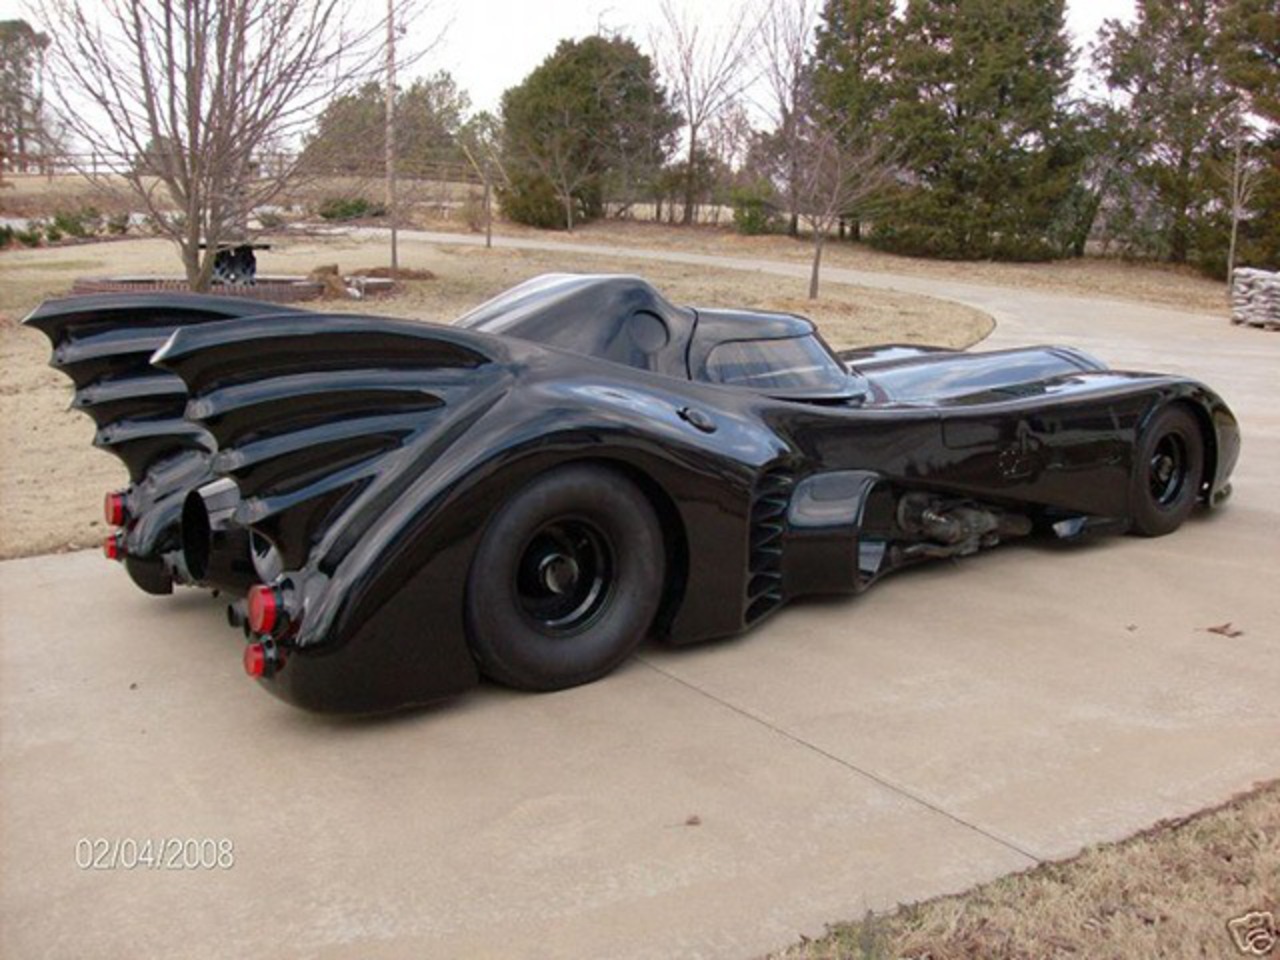 Tim Burton Batmobile On Ebay For $500,000 | Gadget Lab | Wired.